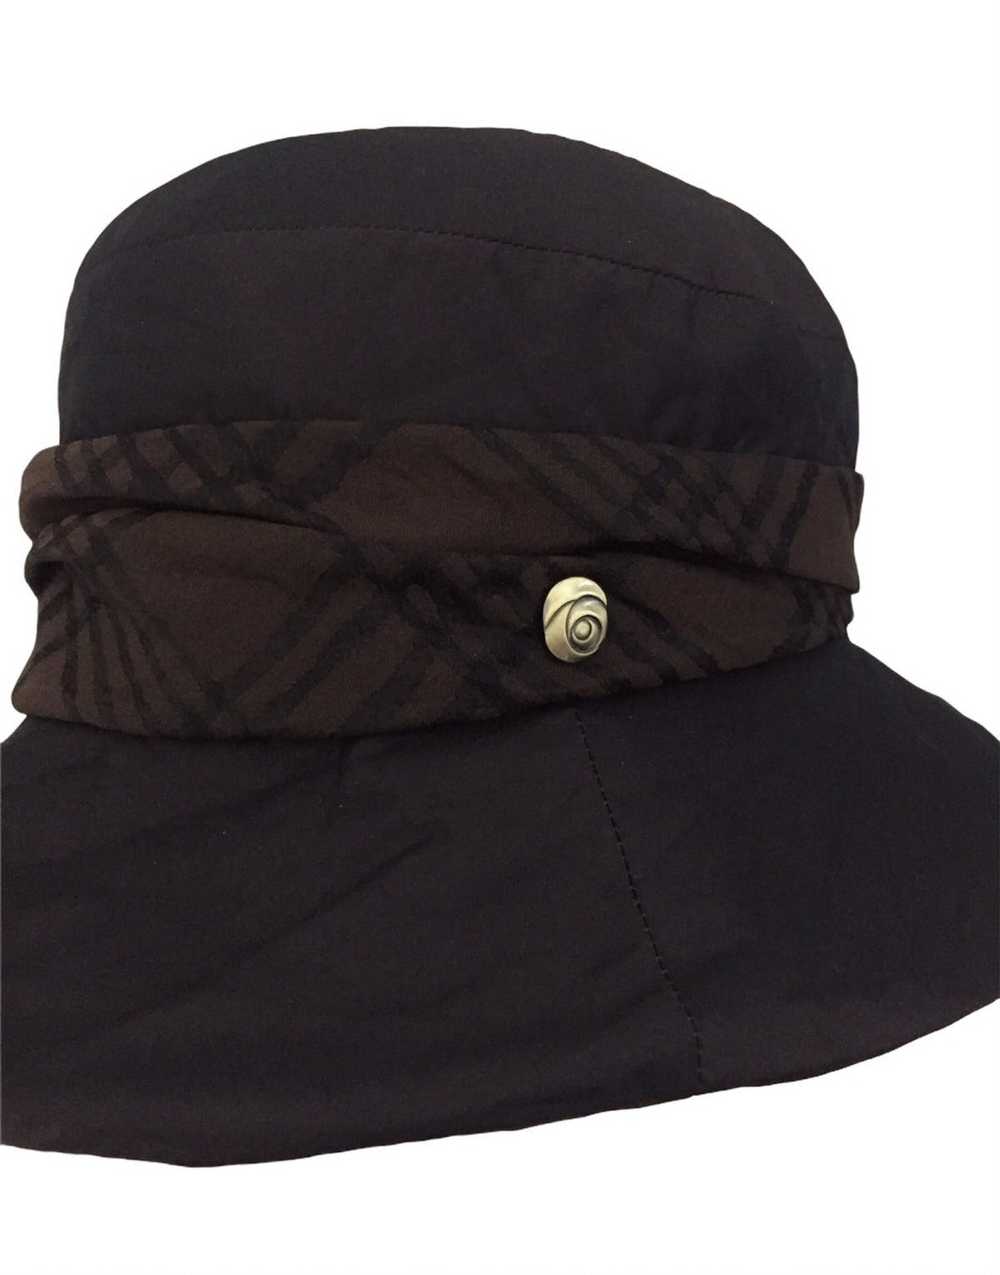 Lanvin Lanvin Collection Bucket Hat - image 2